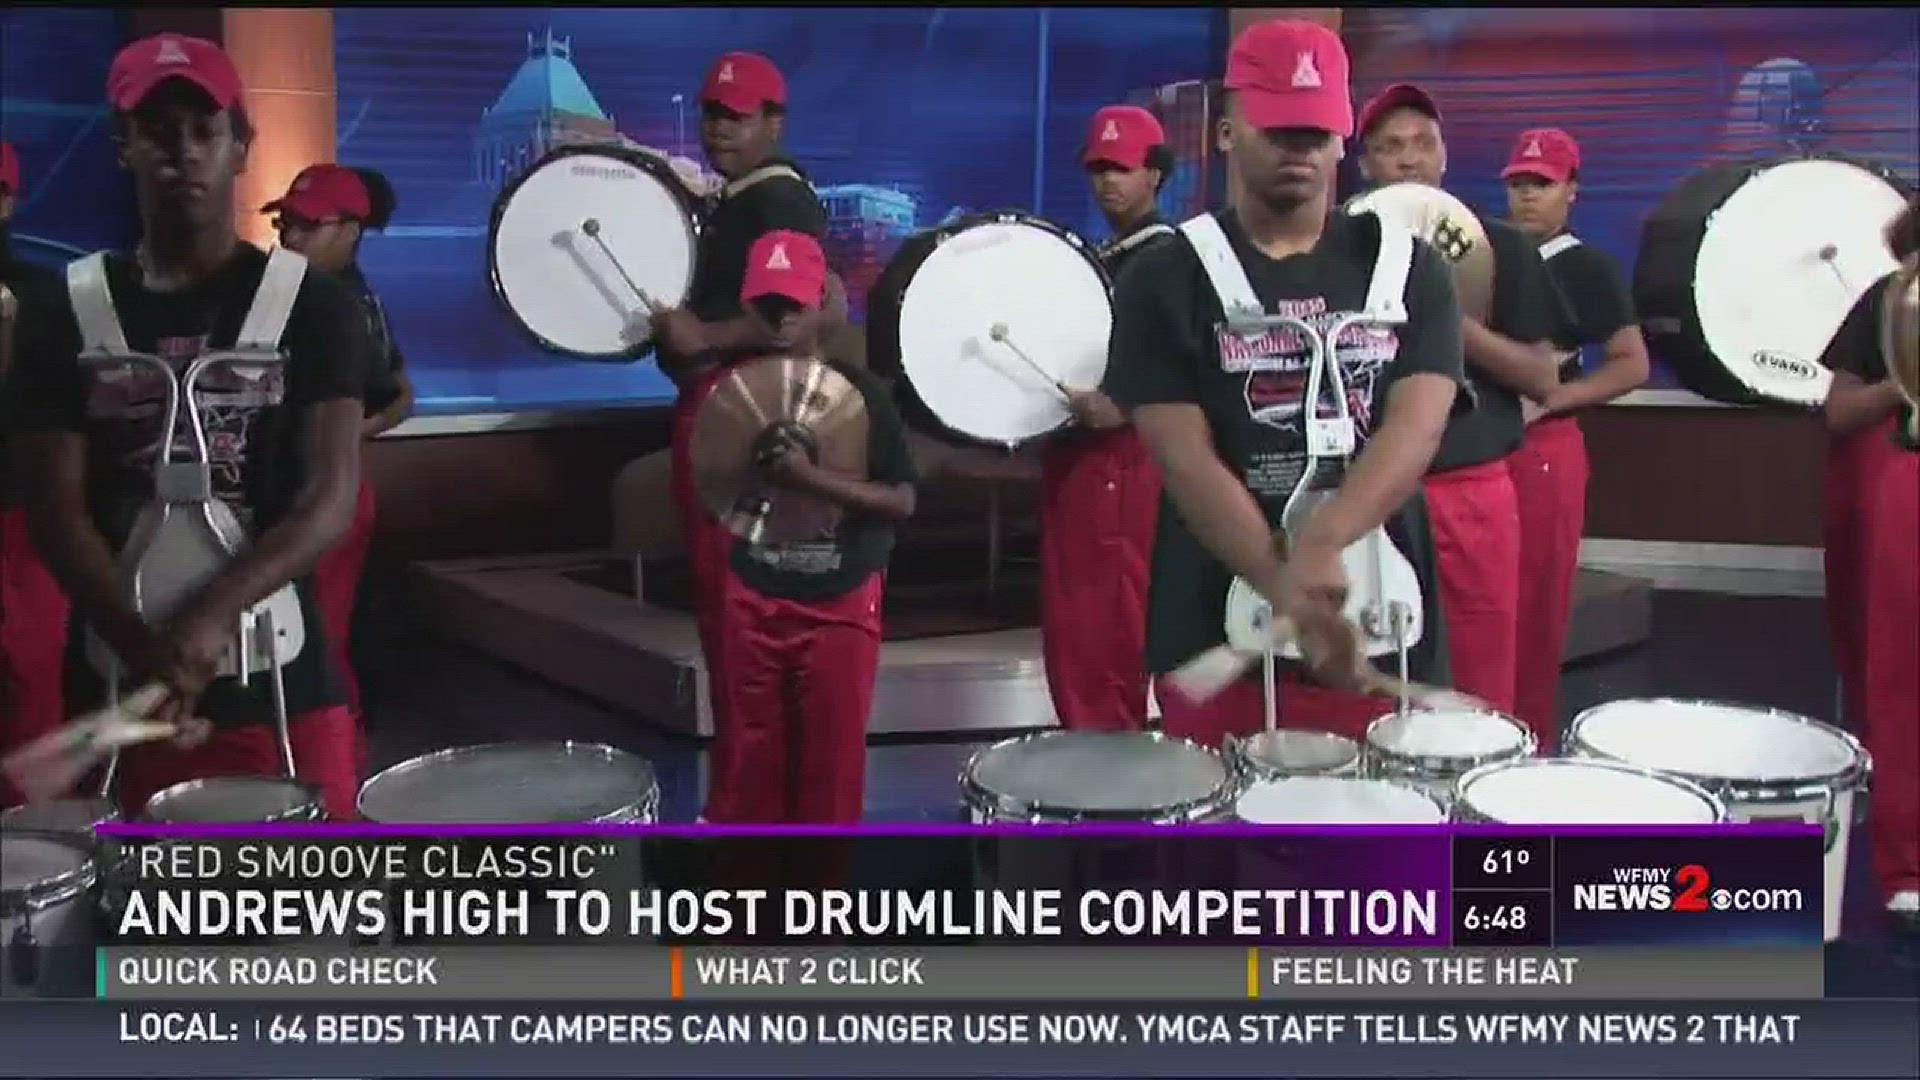 Andrews High Hosting Drumline Competition